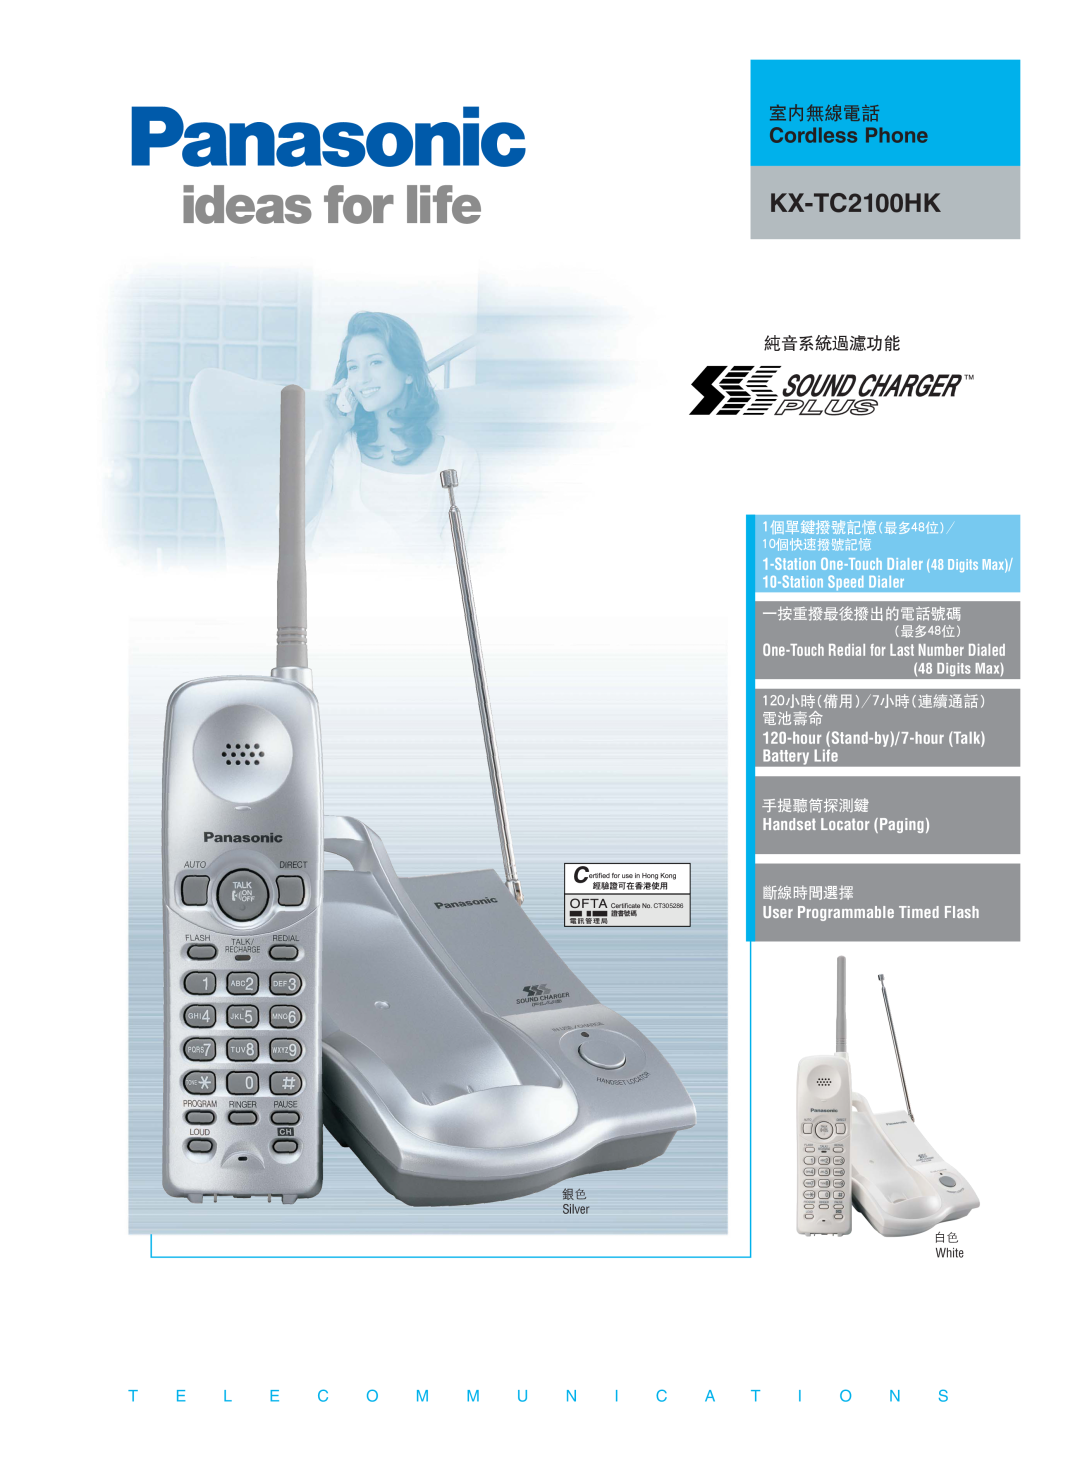 Panasonic KX-TC2100HK manual Cordless Phone, 室內無線電話, 純音系統過濾功能, 1個單鍵撥號記憶最多48位, Station Speed Dialer, 一按重撥最後撥出的電話號碼, 手提聽筒探測鍵 